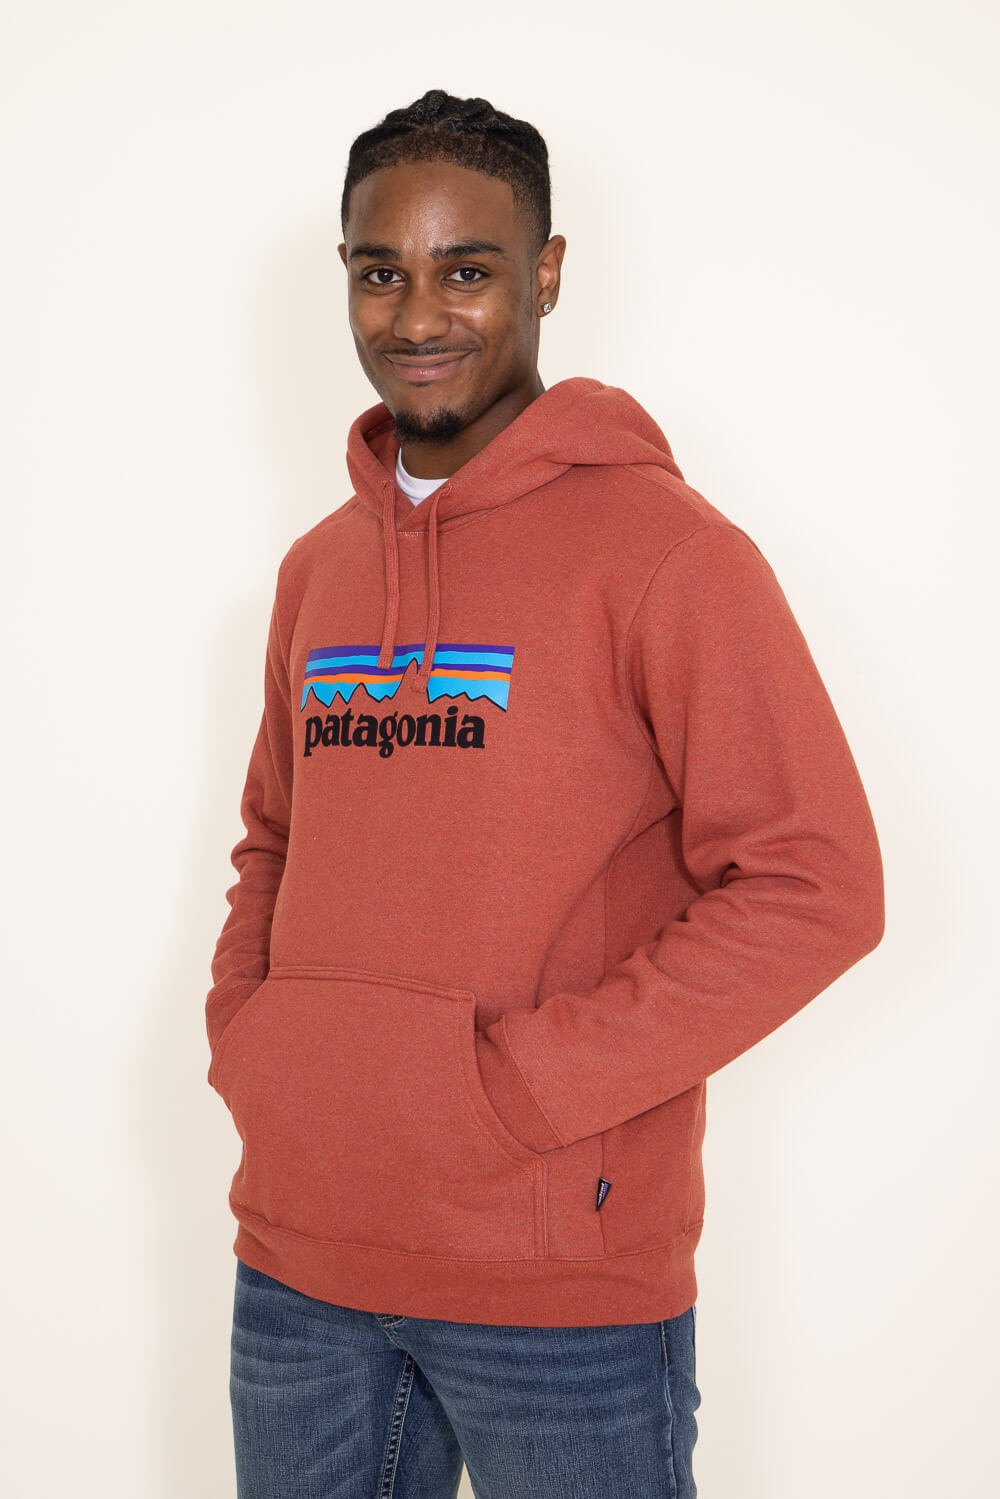 Patagonia Regular Size 2XL Hoodies & Sweatshirts for Men for Sale, Shop  Men's Athletic Clothes